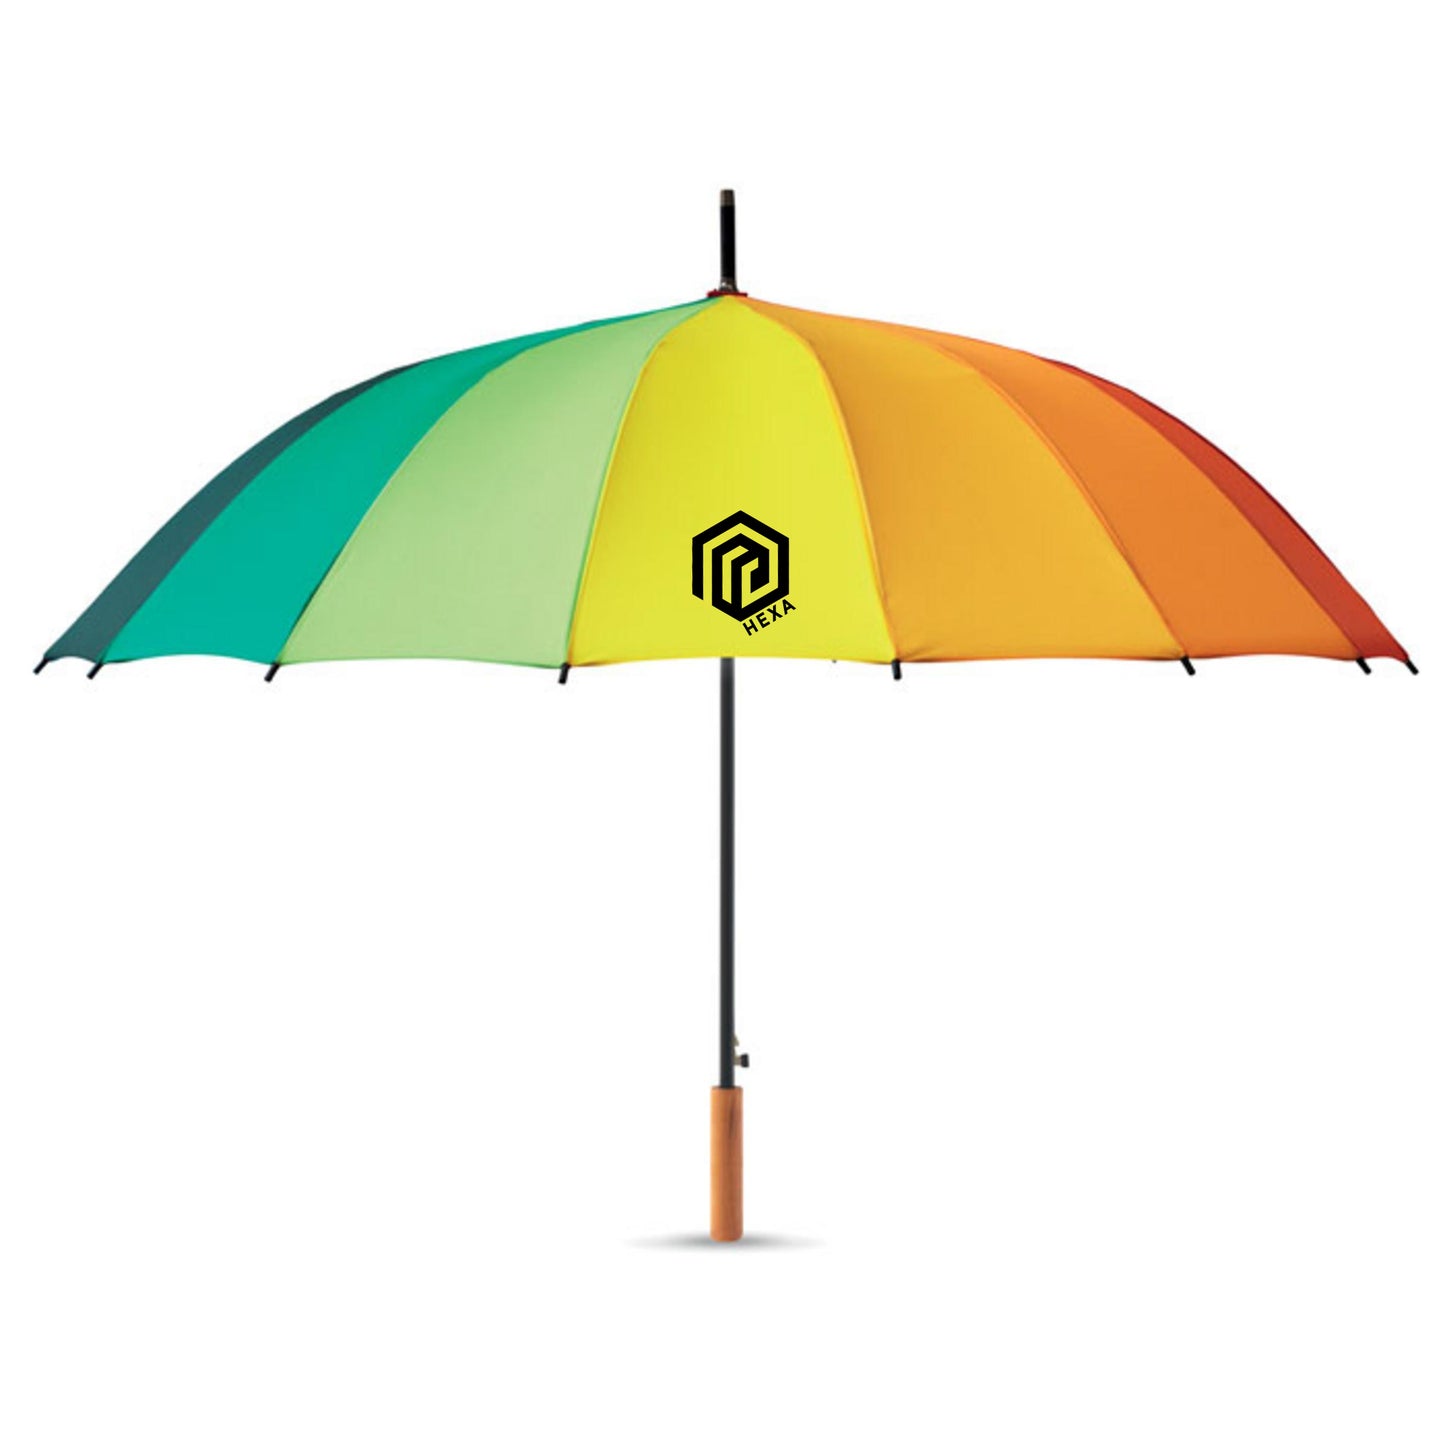 27 Inch Rainbow Umbrella